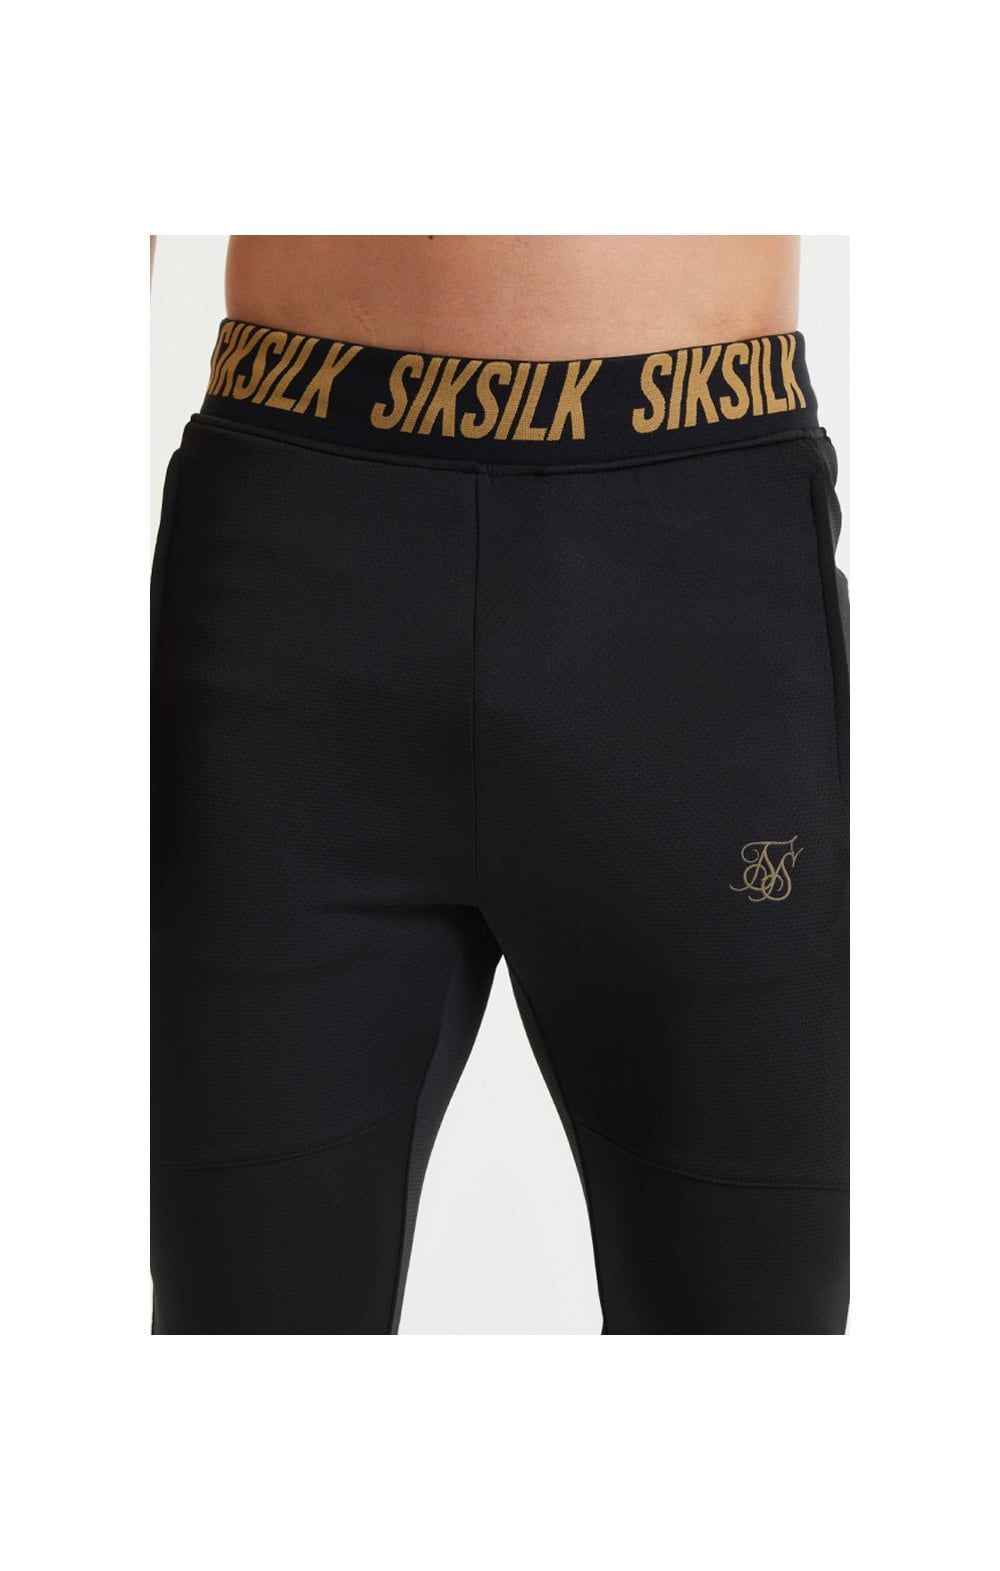 SikSilk Performance Agility Pants - Black &amp; Gold (1)